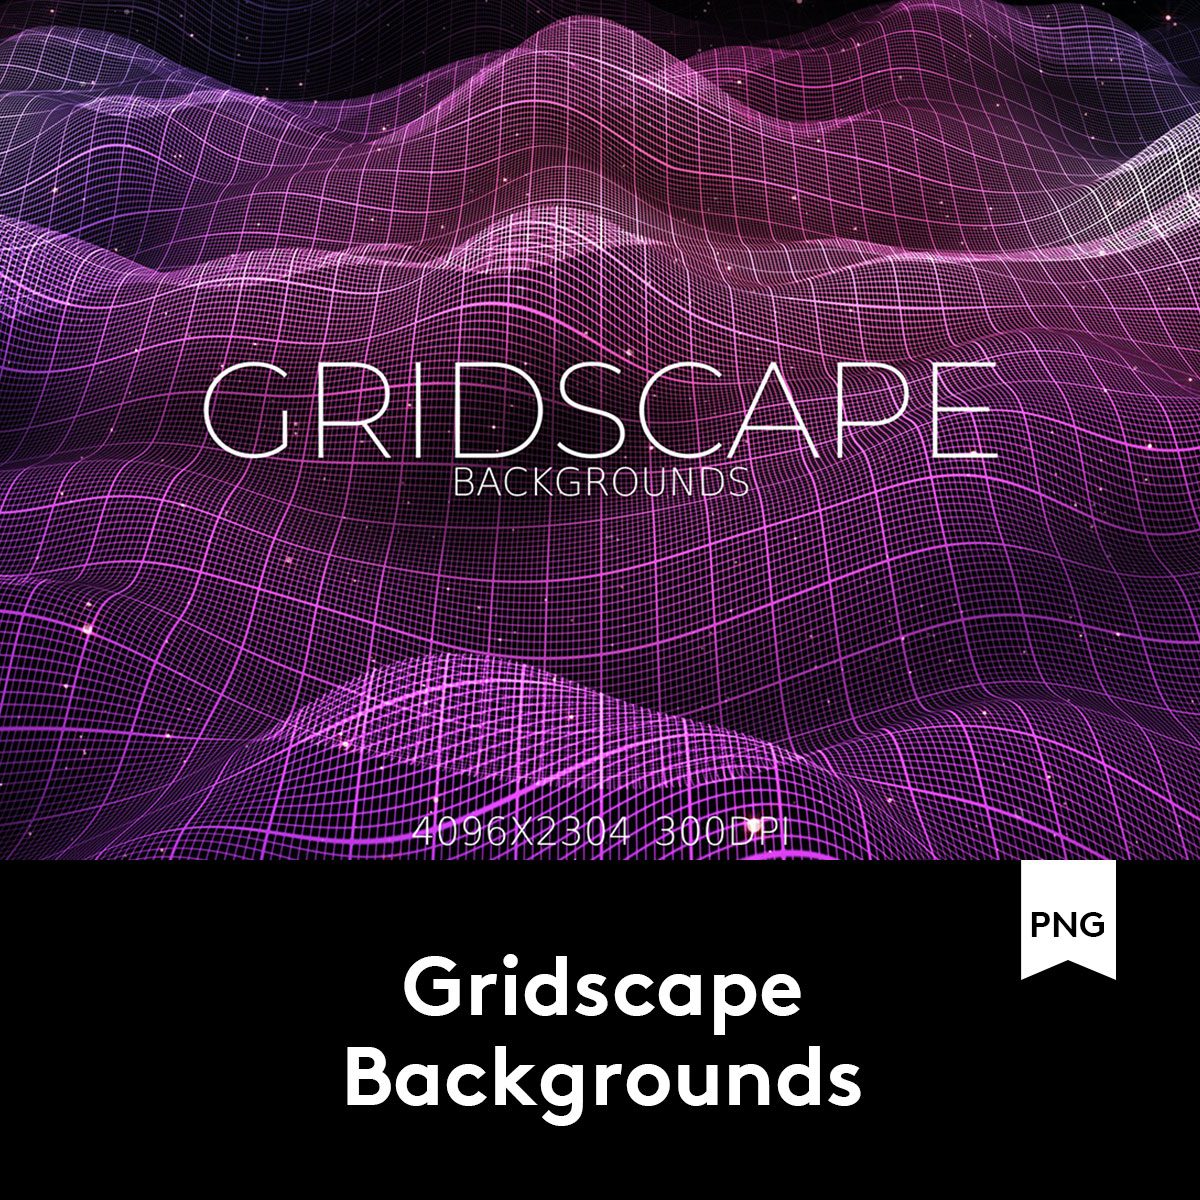 Gridscape Backgrounds 7款科幻波浪网格JPG背景素材 B2020042303